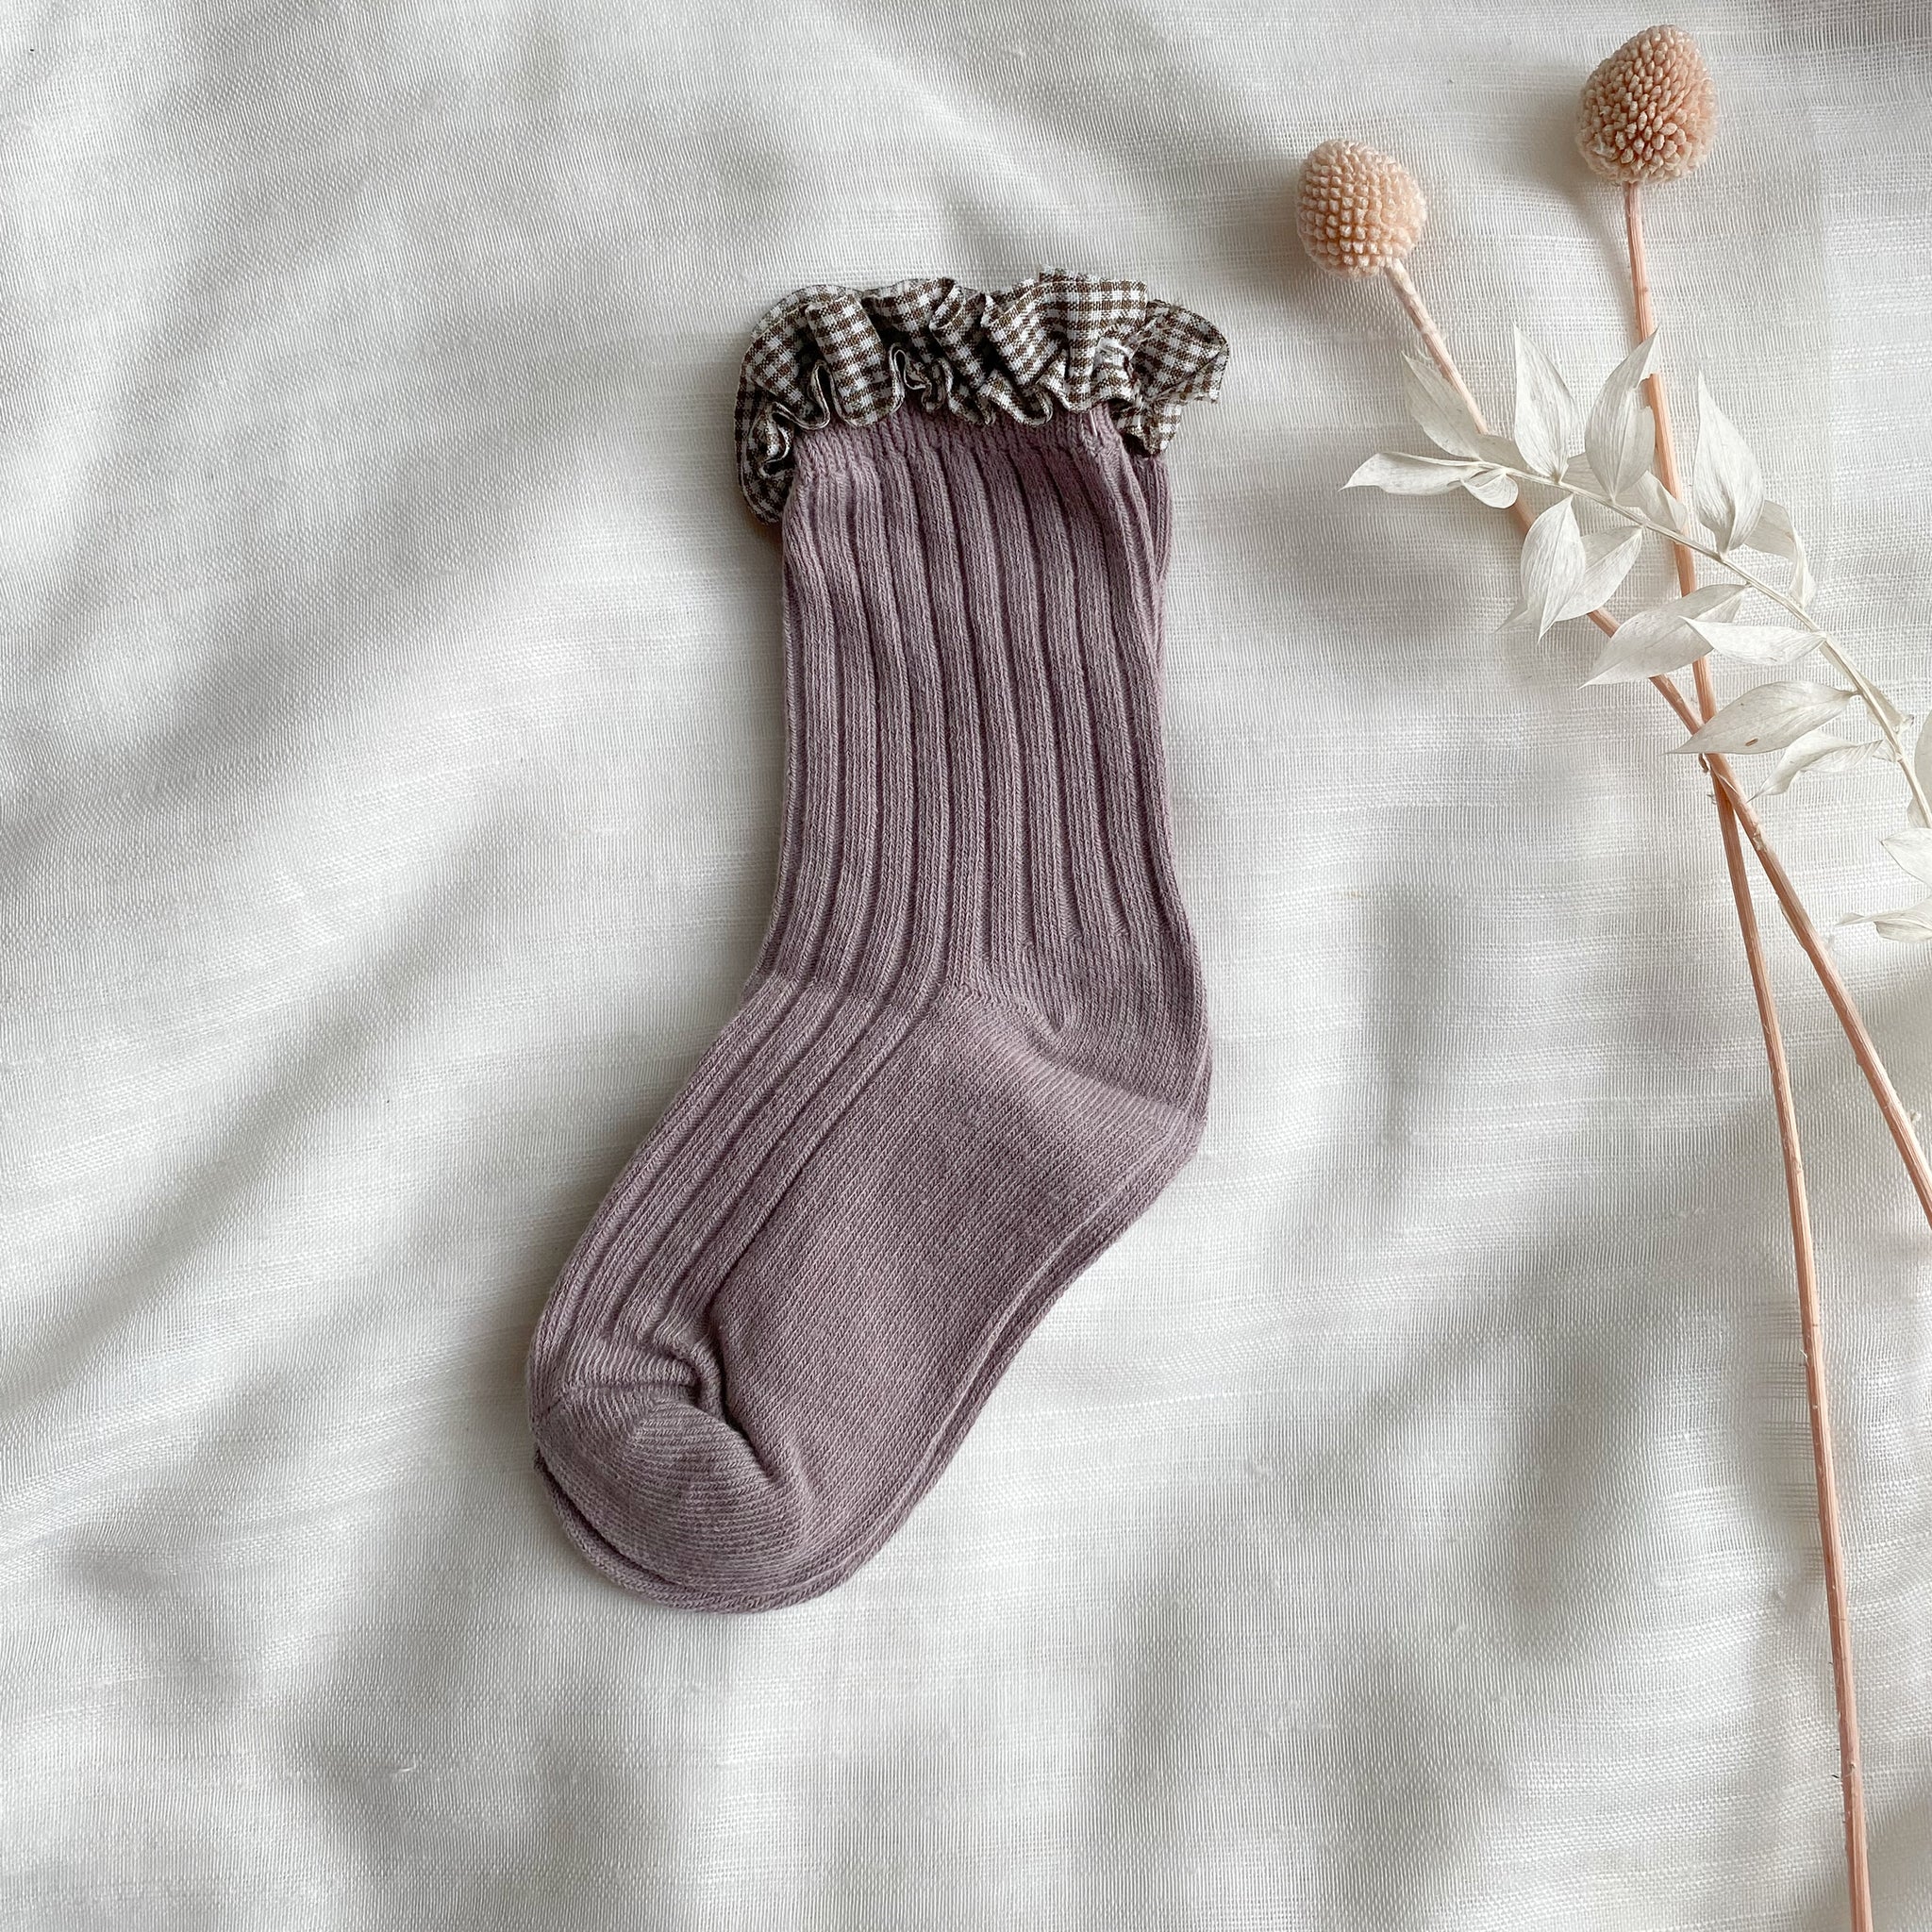 Vintage Gingham Frill Socks – Norah's Treasures